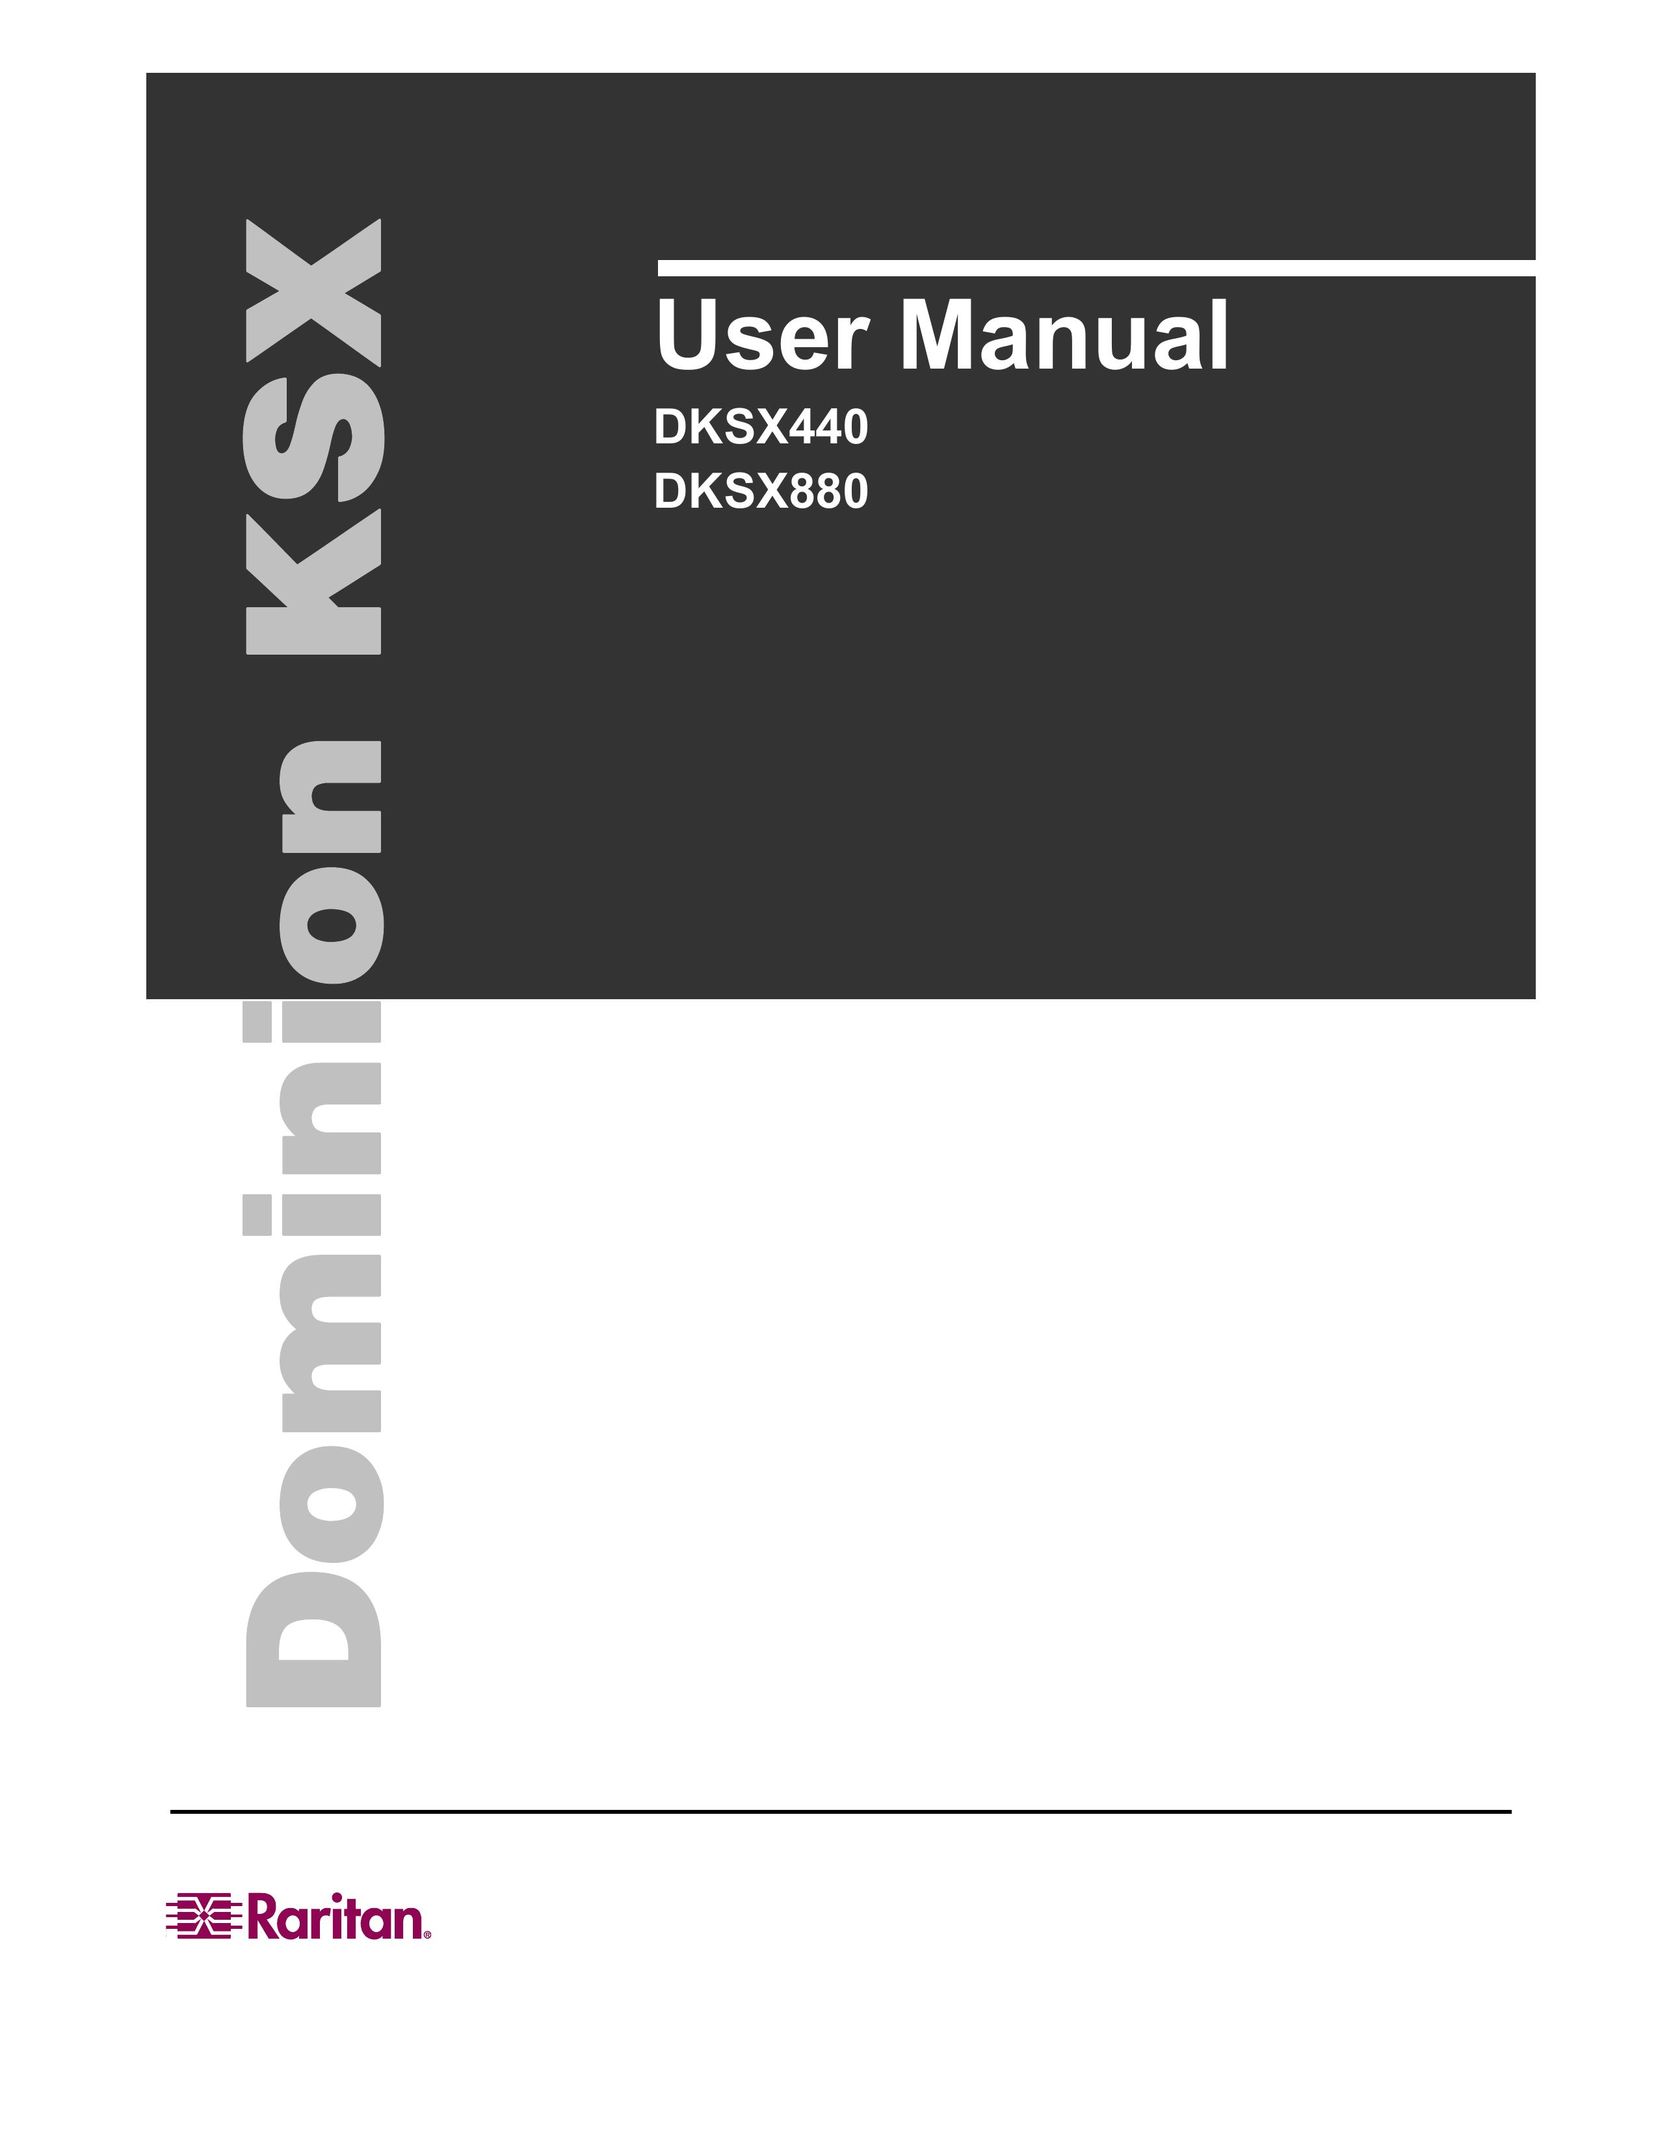 Raritan Computer DKSX880 Network Card User Manual